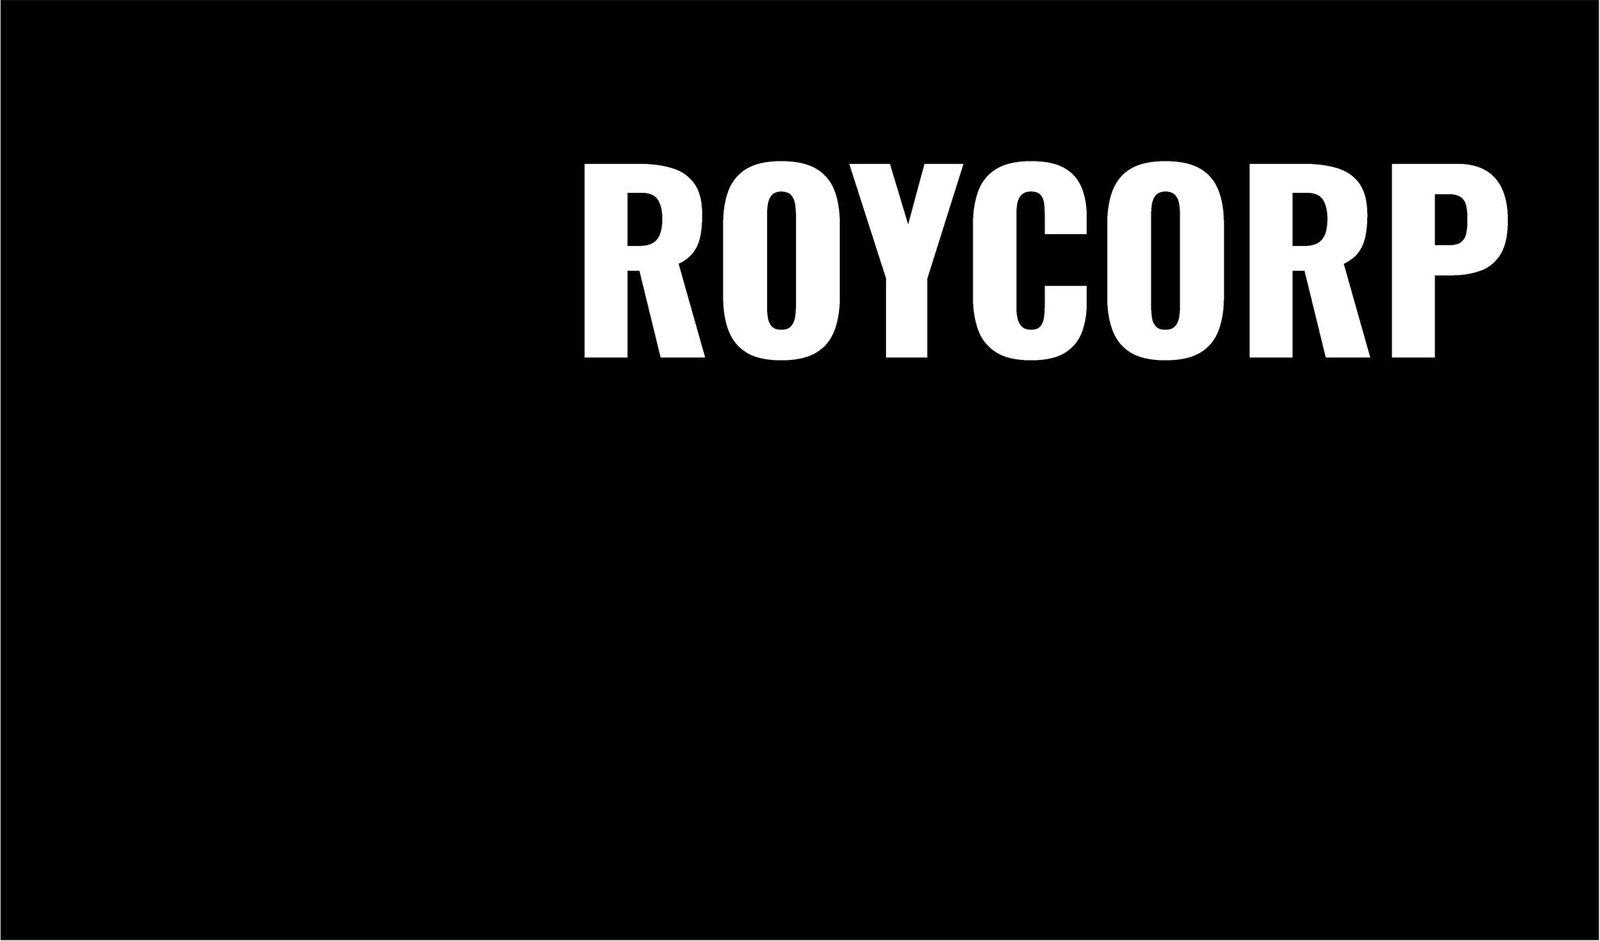 Roycorp